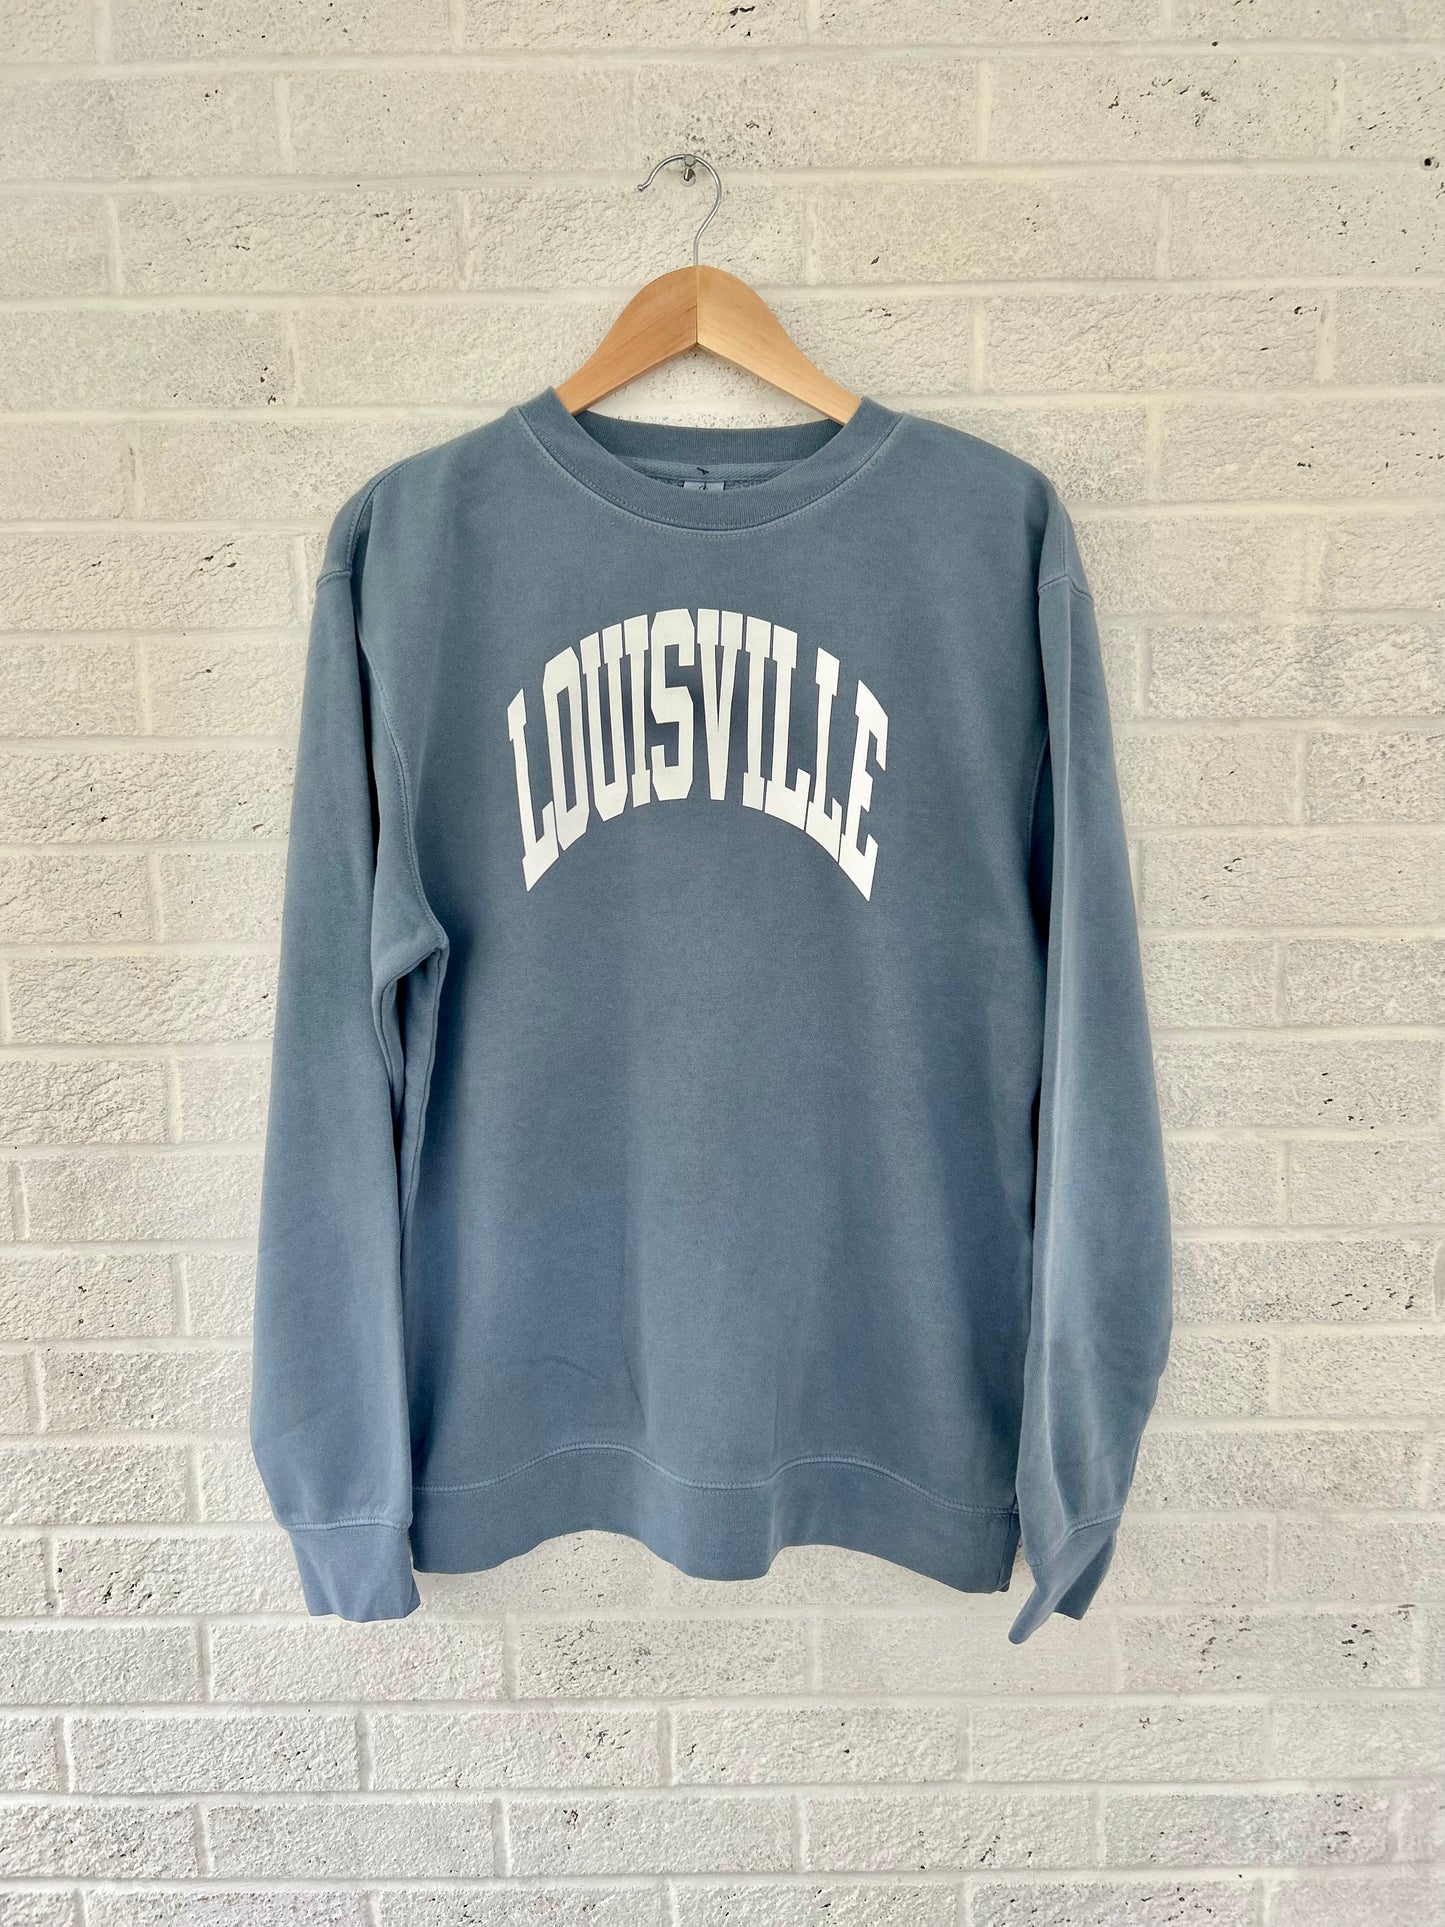 Louisville Arch Vintage Adult Sweat shirt